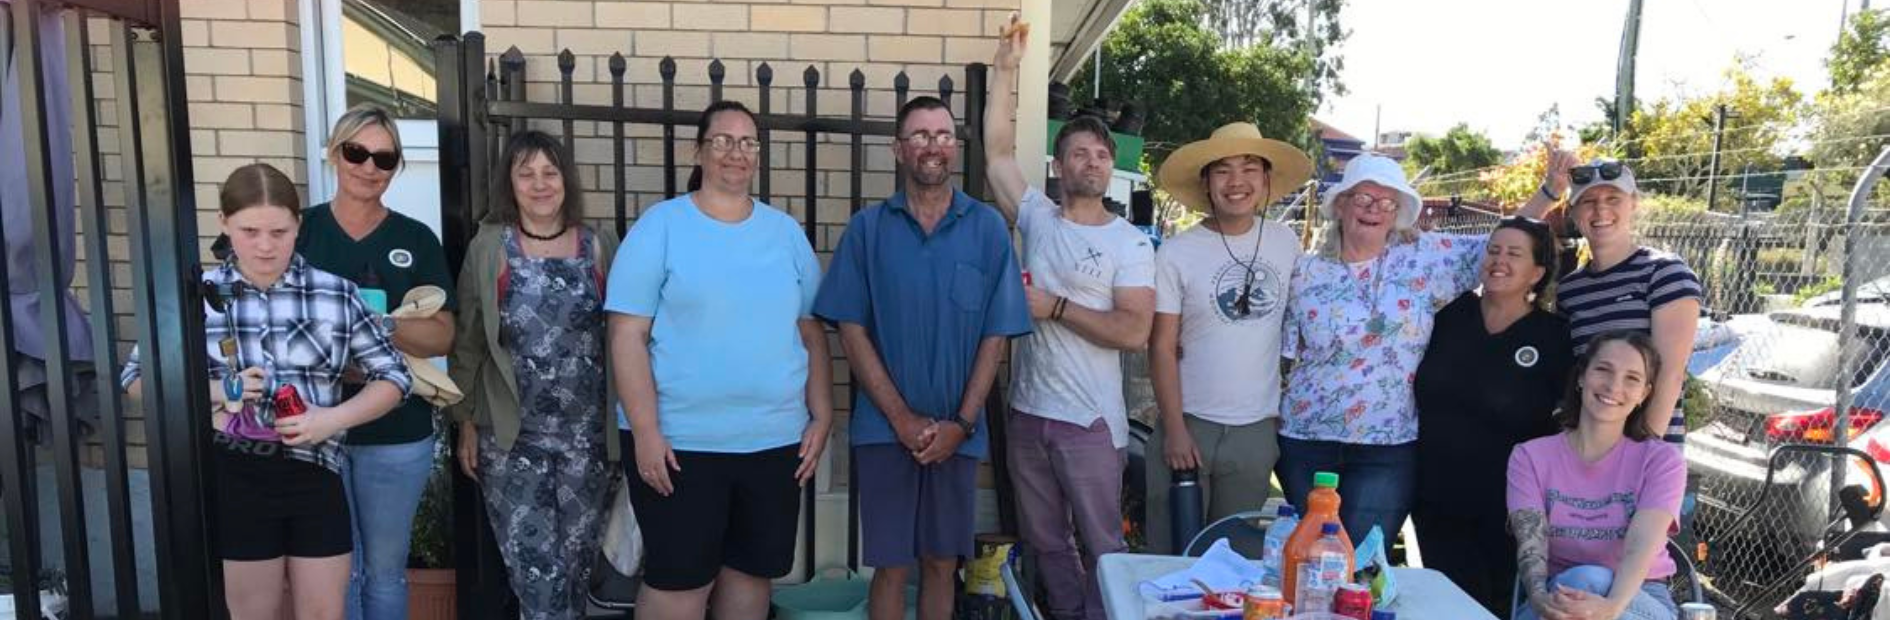 Group photo of the Beenleigh community gardens volunteers